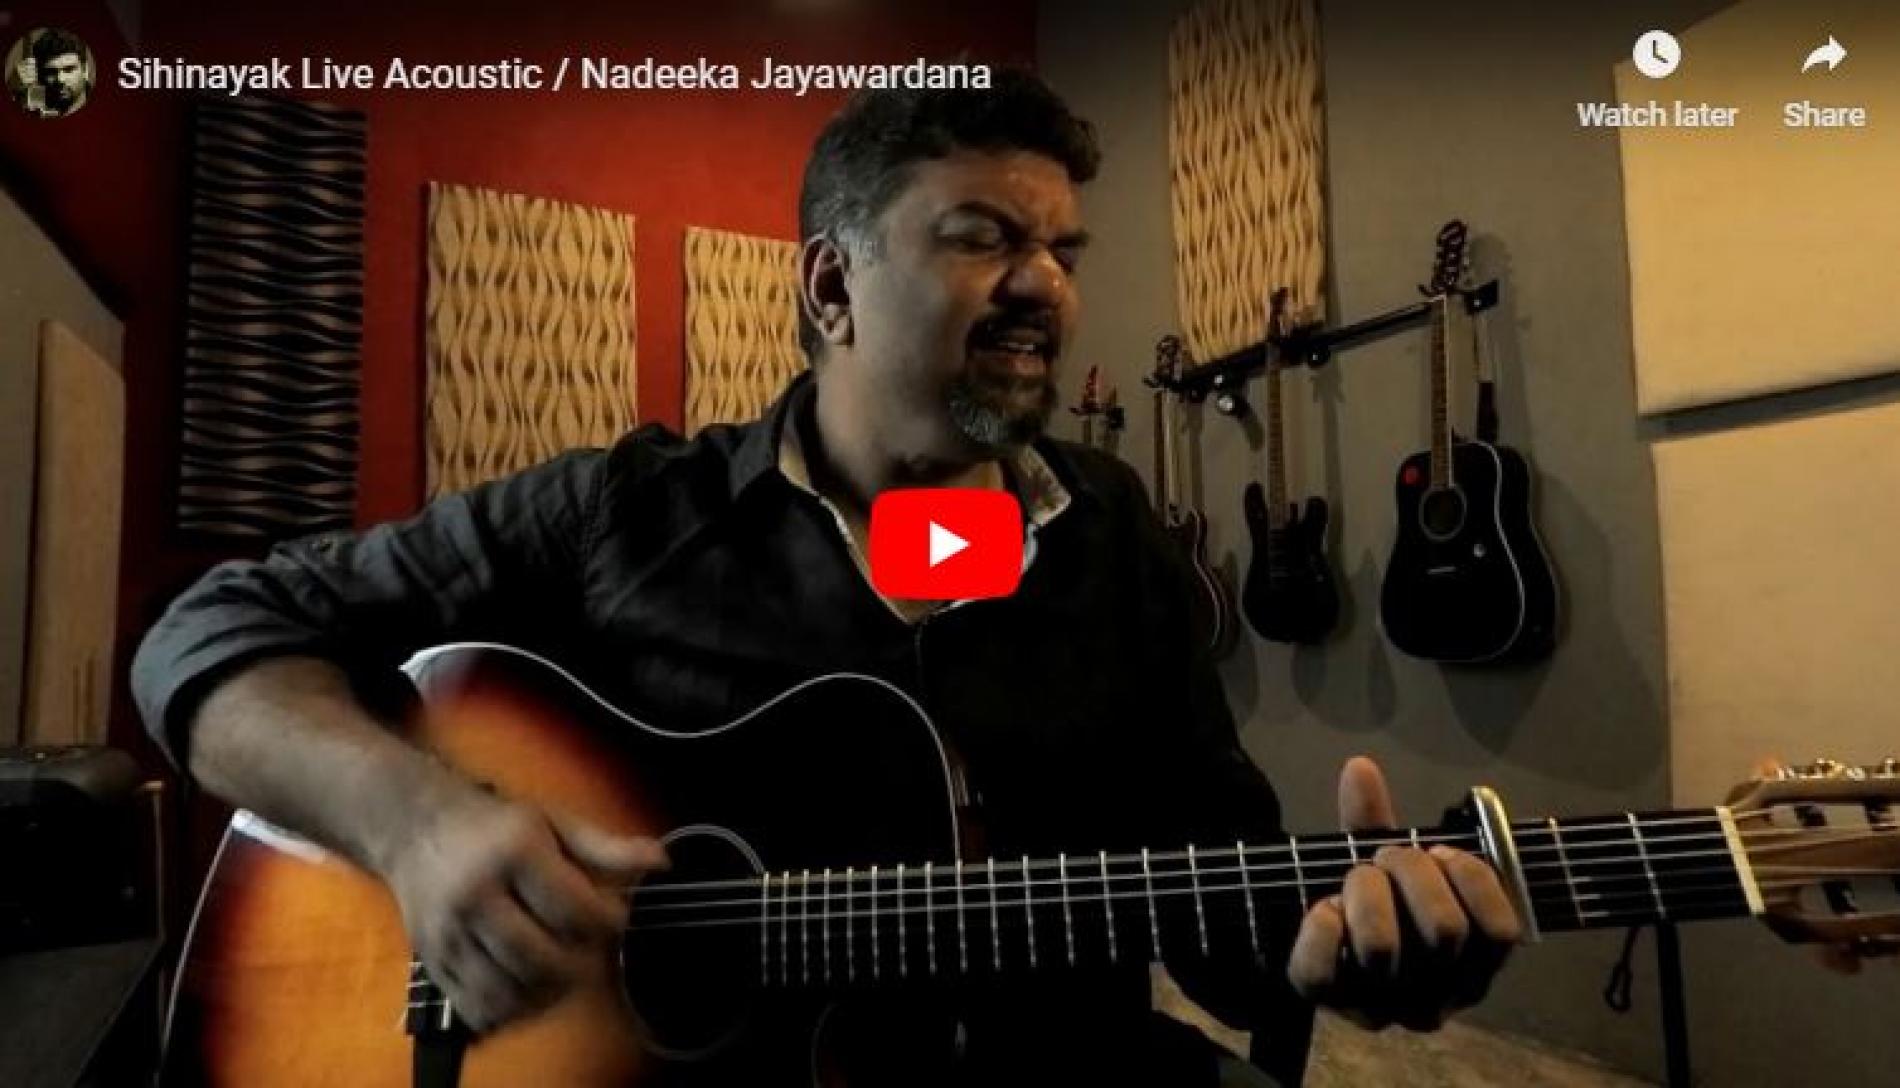 Sihinayak Live Acoustic / Nadeeka Jayawardana